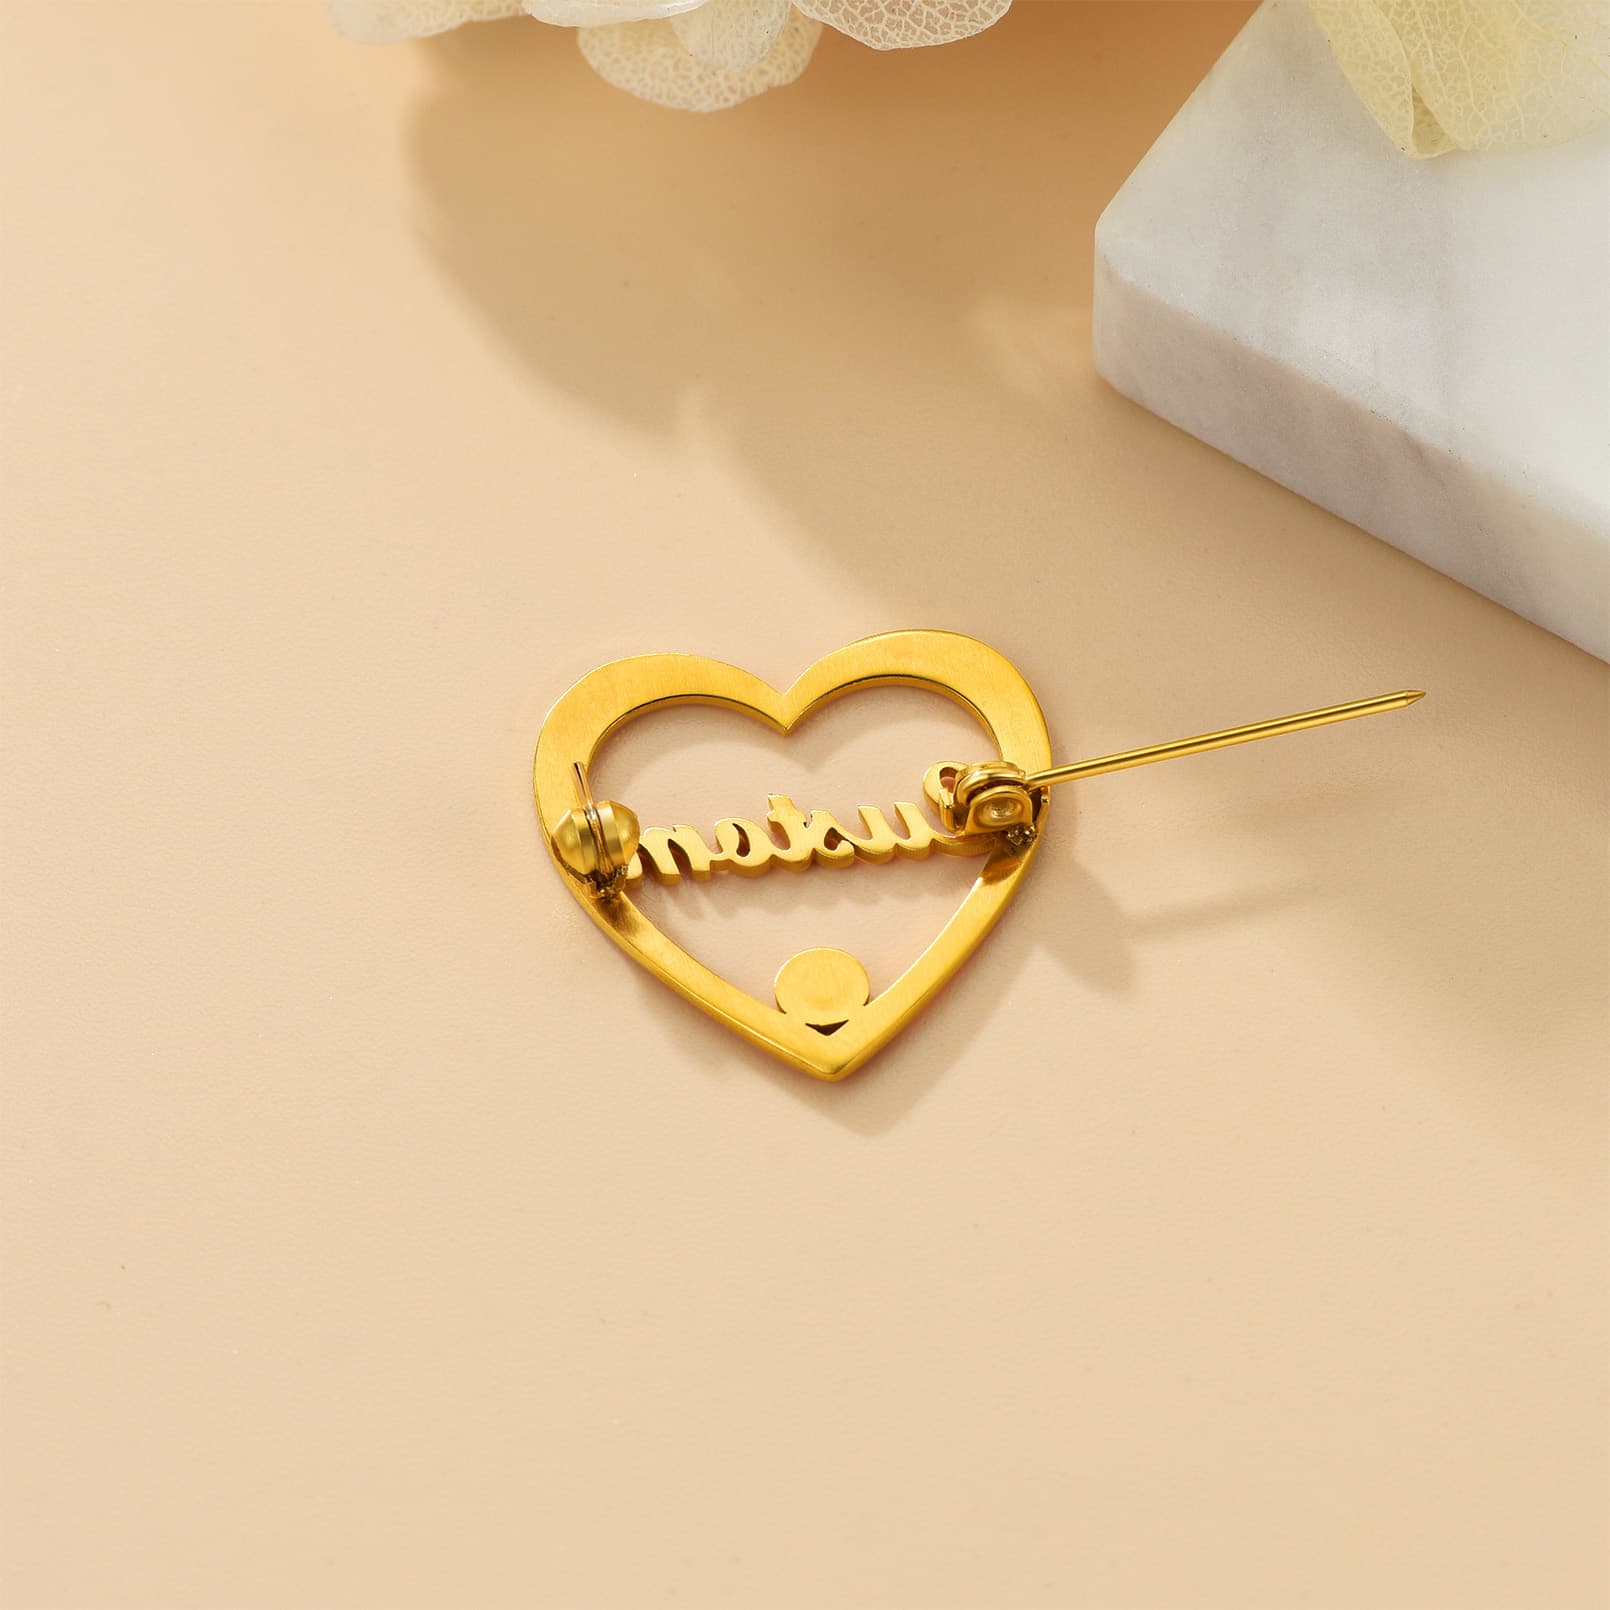 Birthstonesjewelry Personalized Heart Name Birthstone Brooch Gold